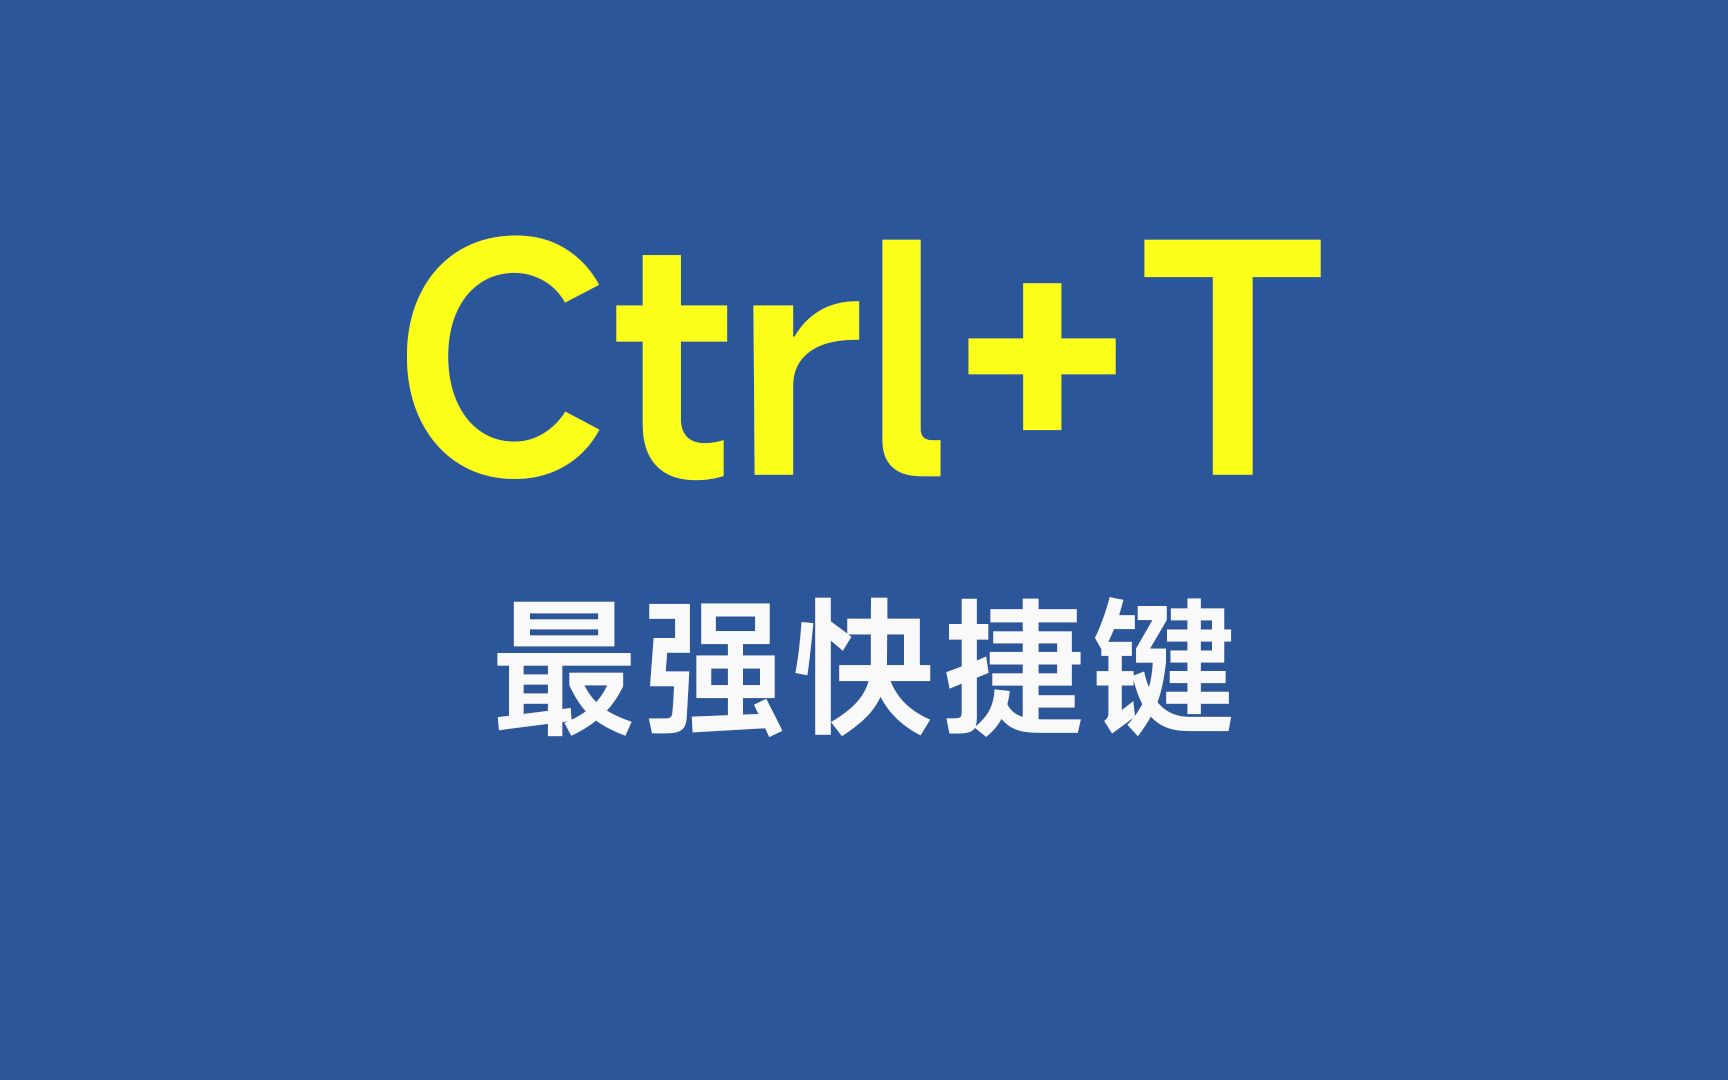 Ctrl+T，Excel中最强大的快捷键，没有之一